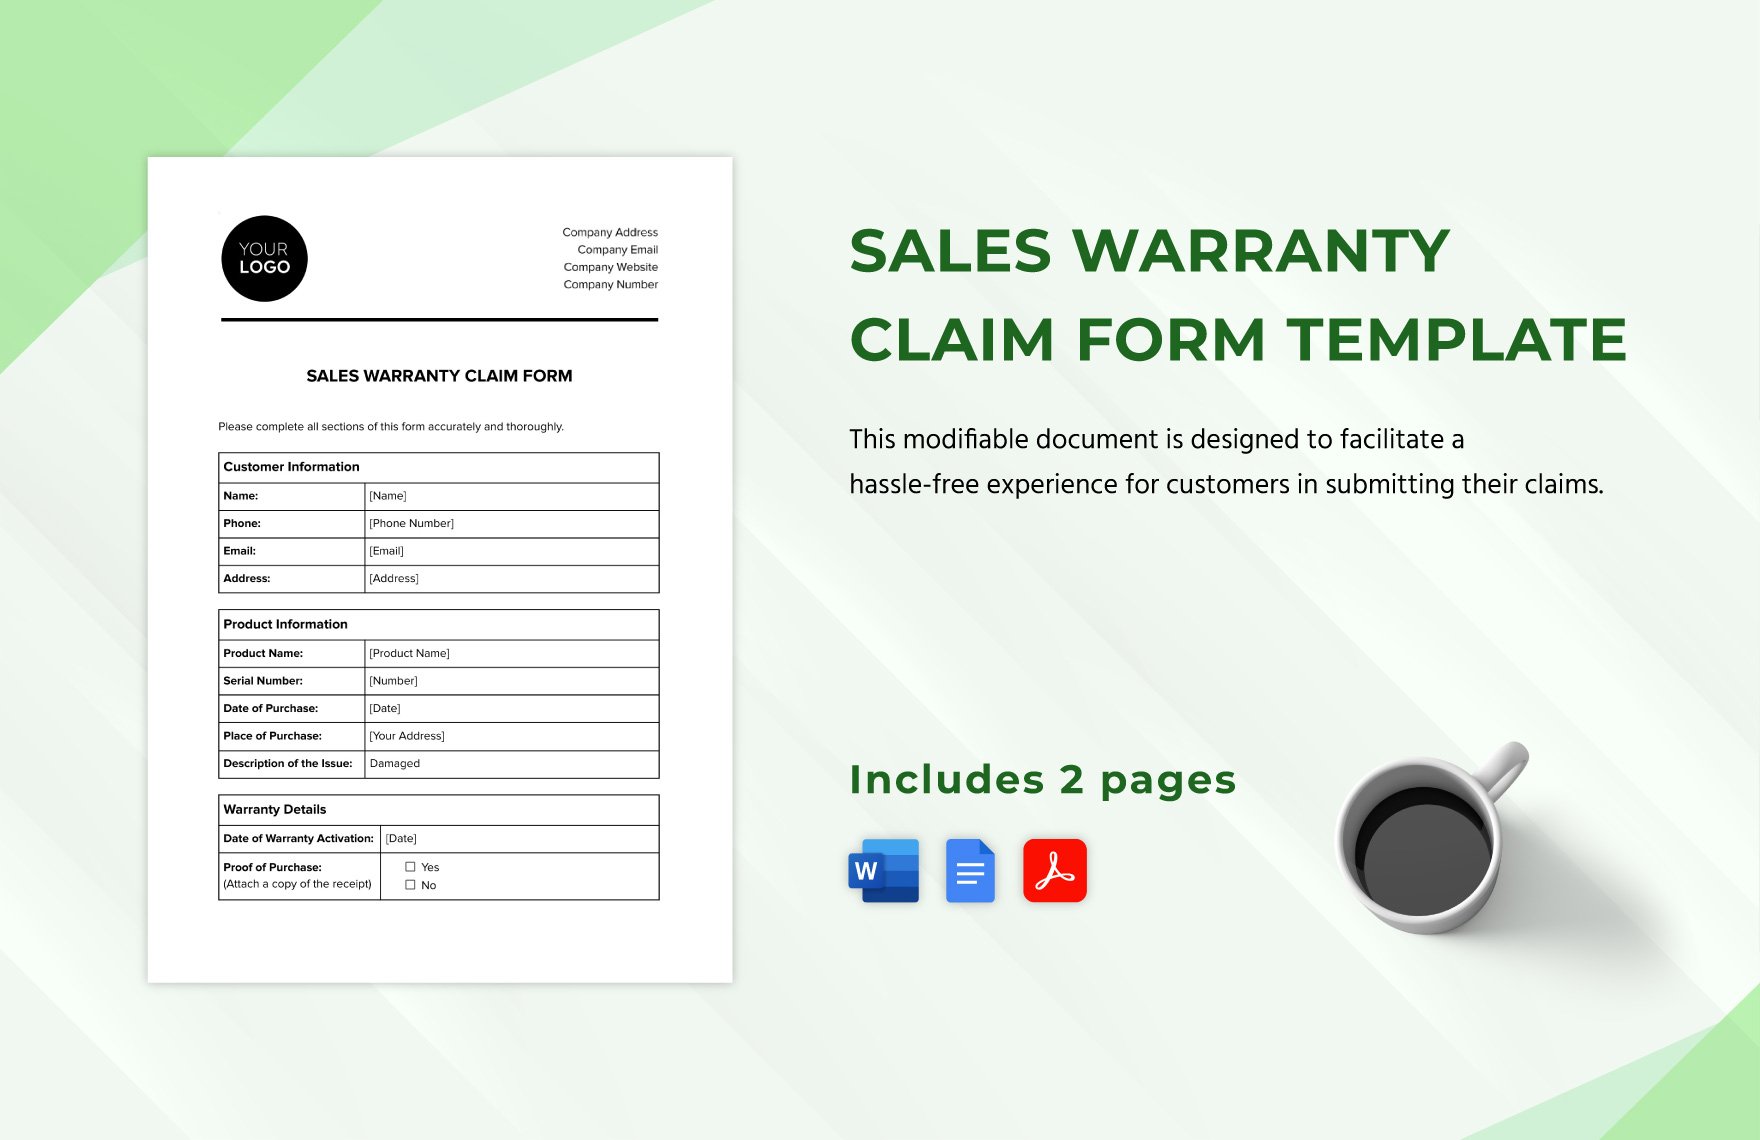 Sales Warranty Claim Form Template in Word, Google Docs, PDF